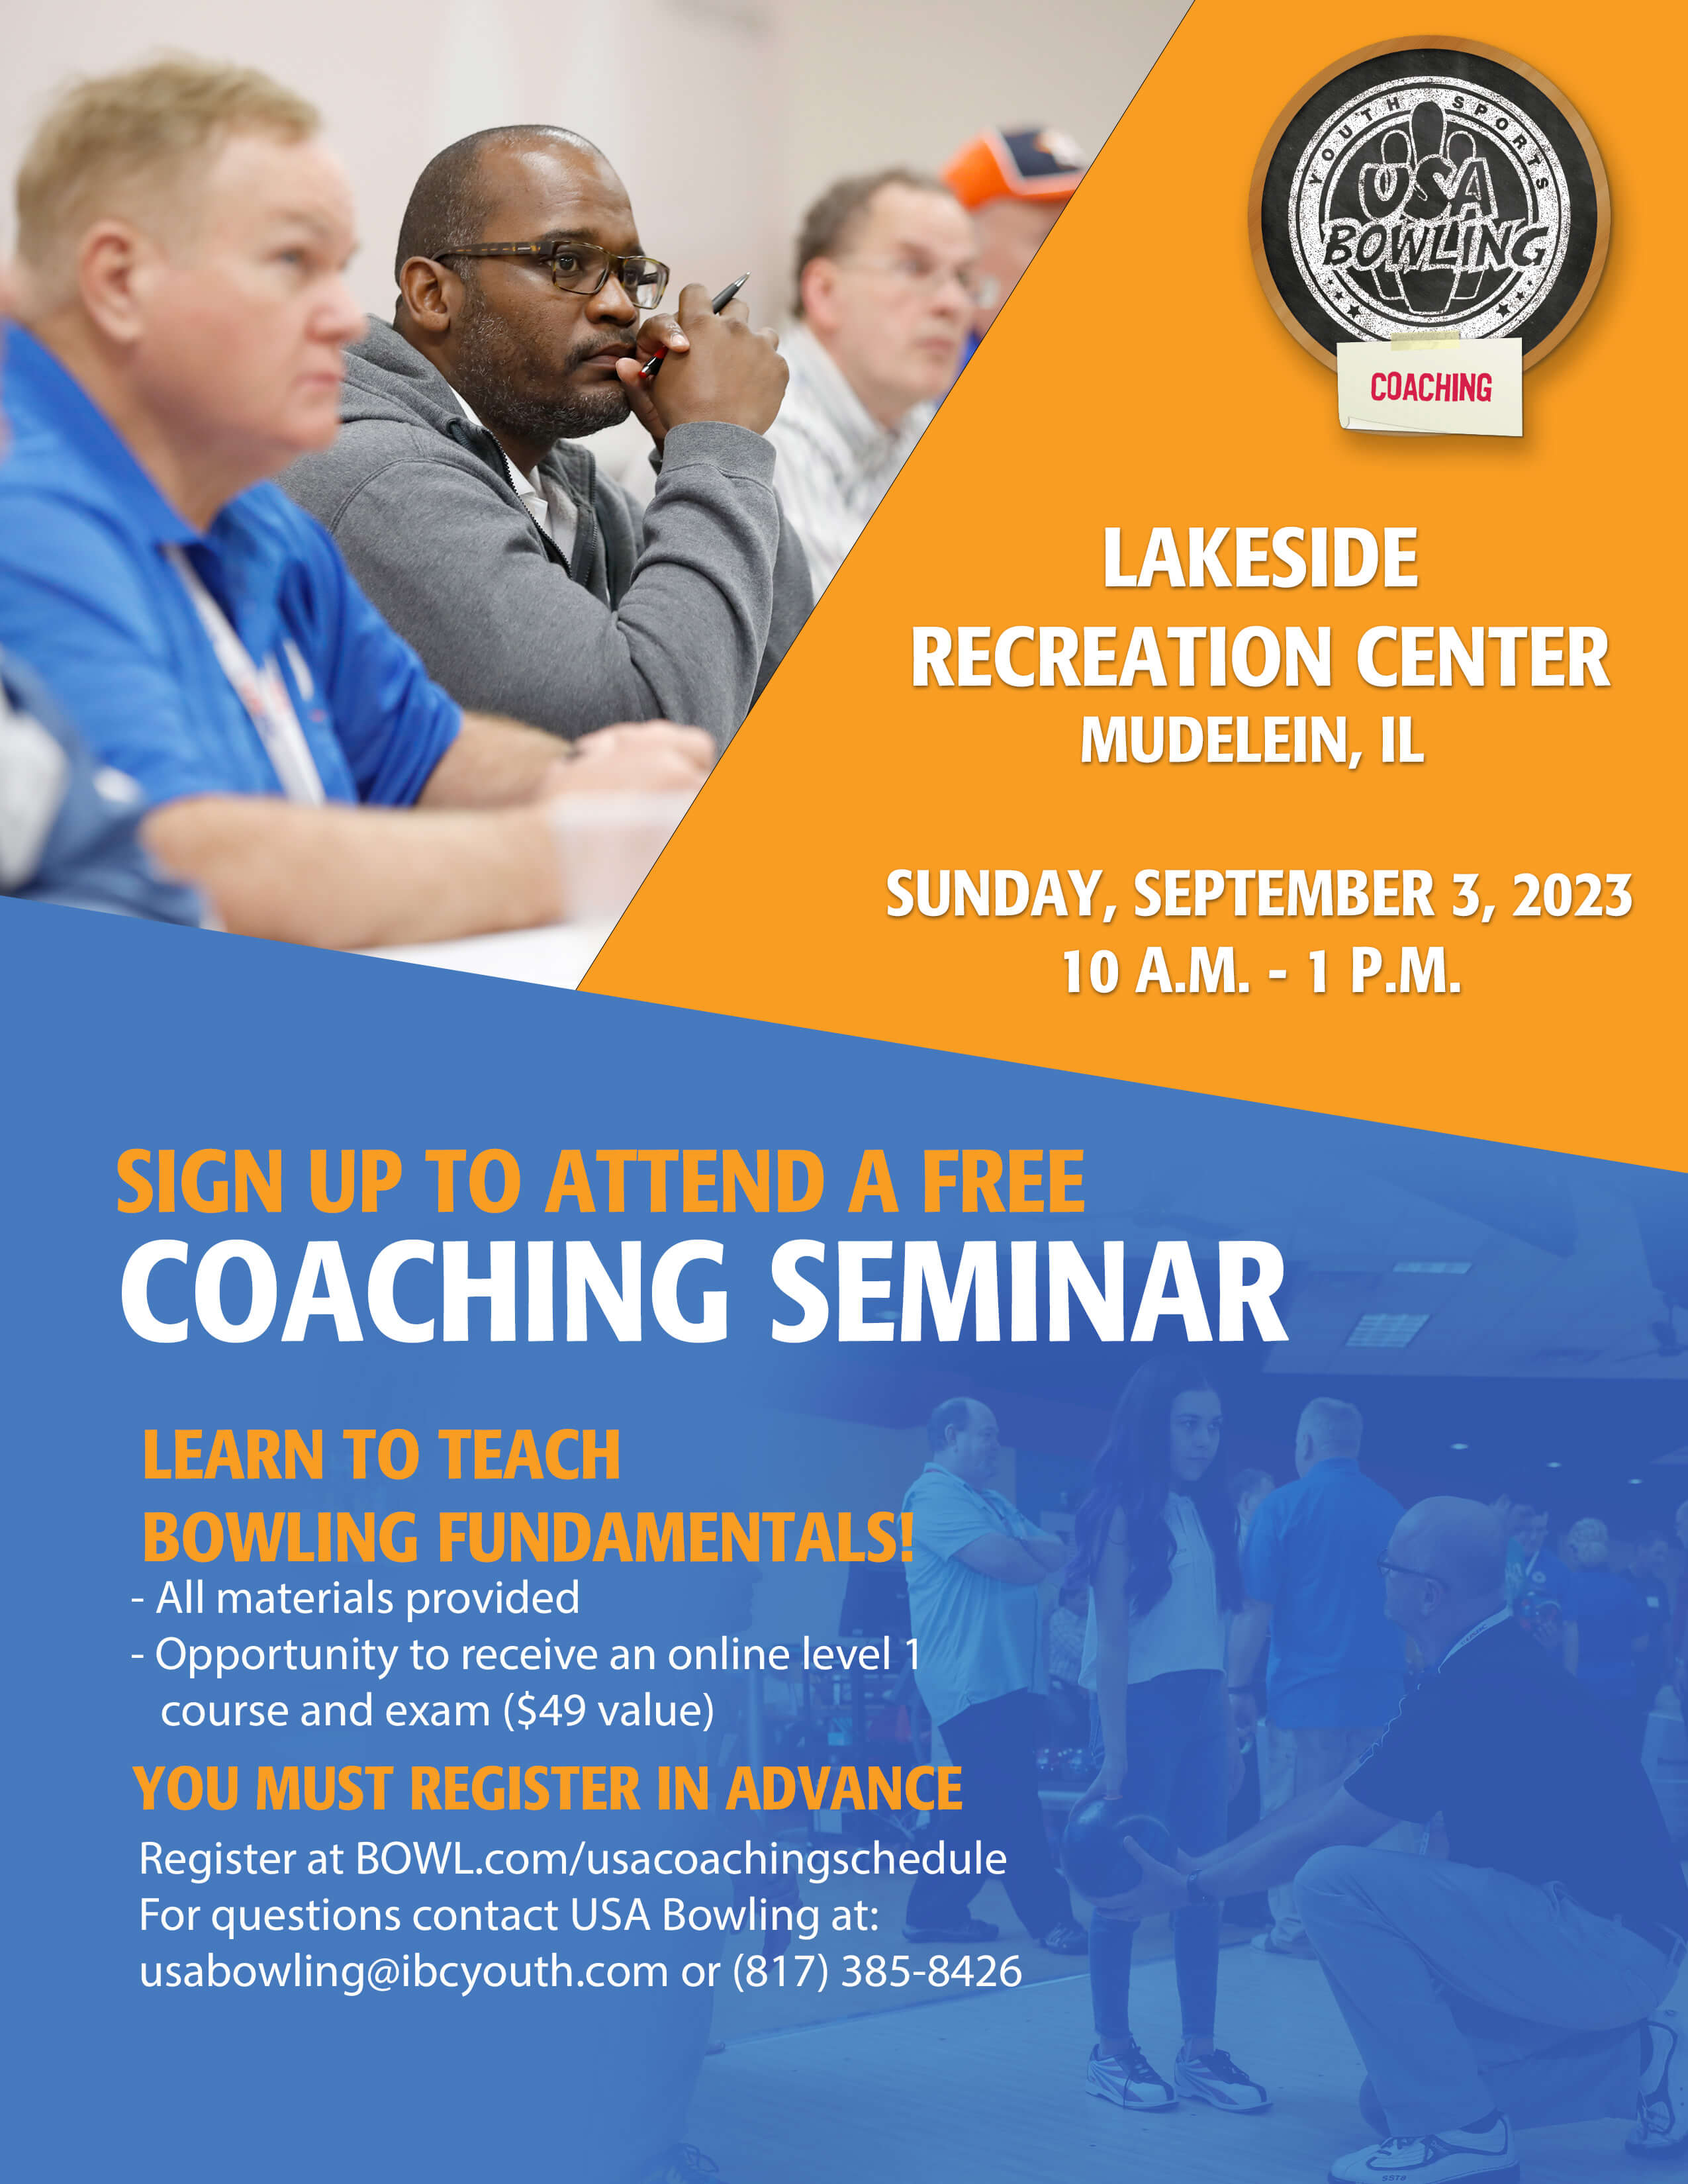 USA Bowling Free Coaching Seminar at Lakeside Recreation Center September 3, 2023